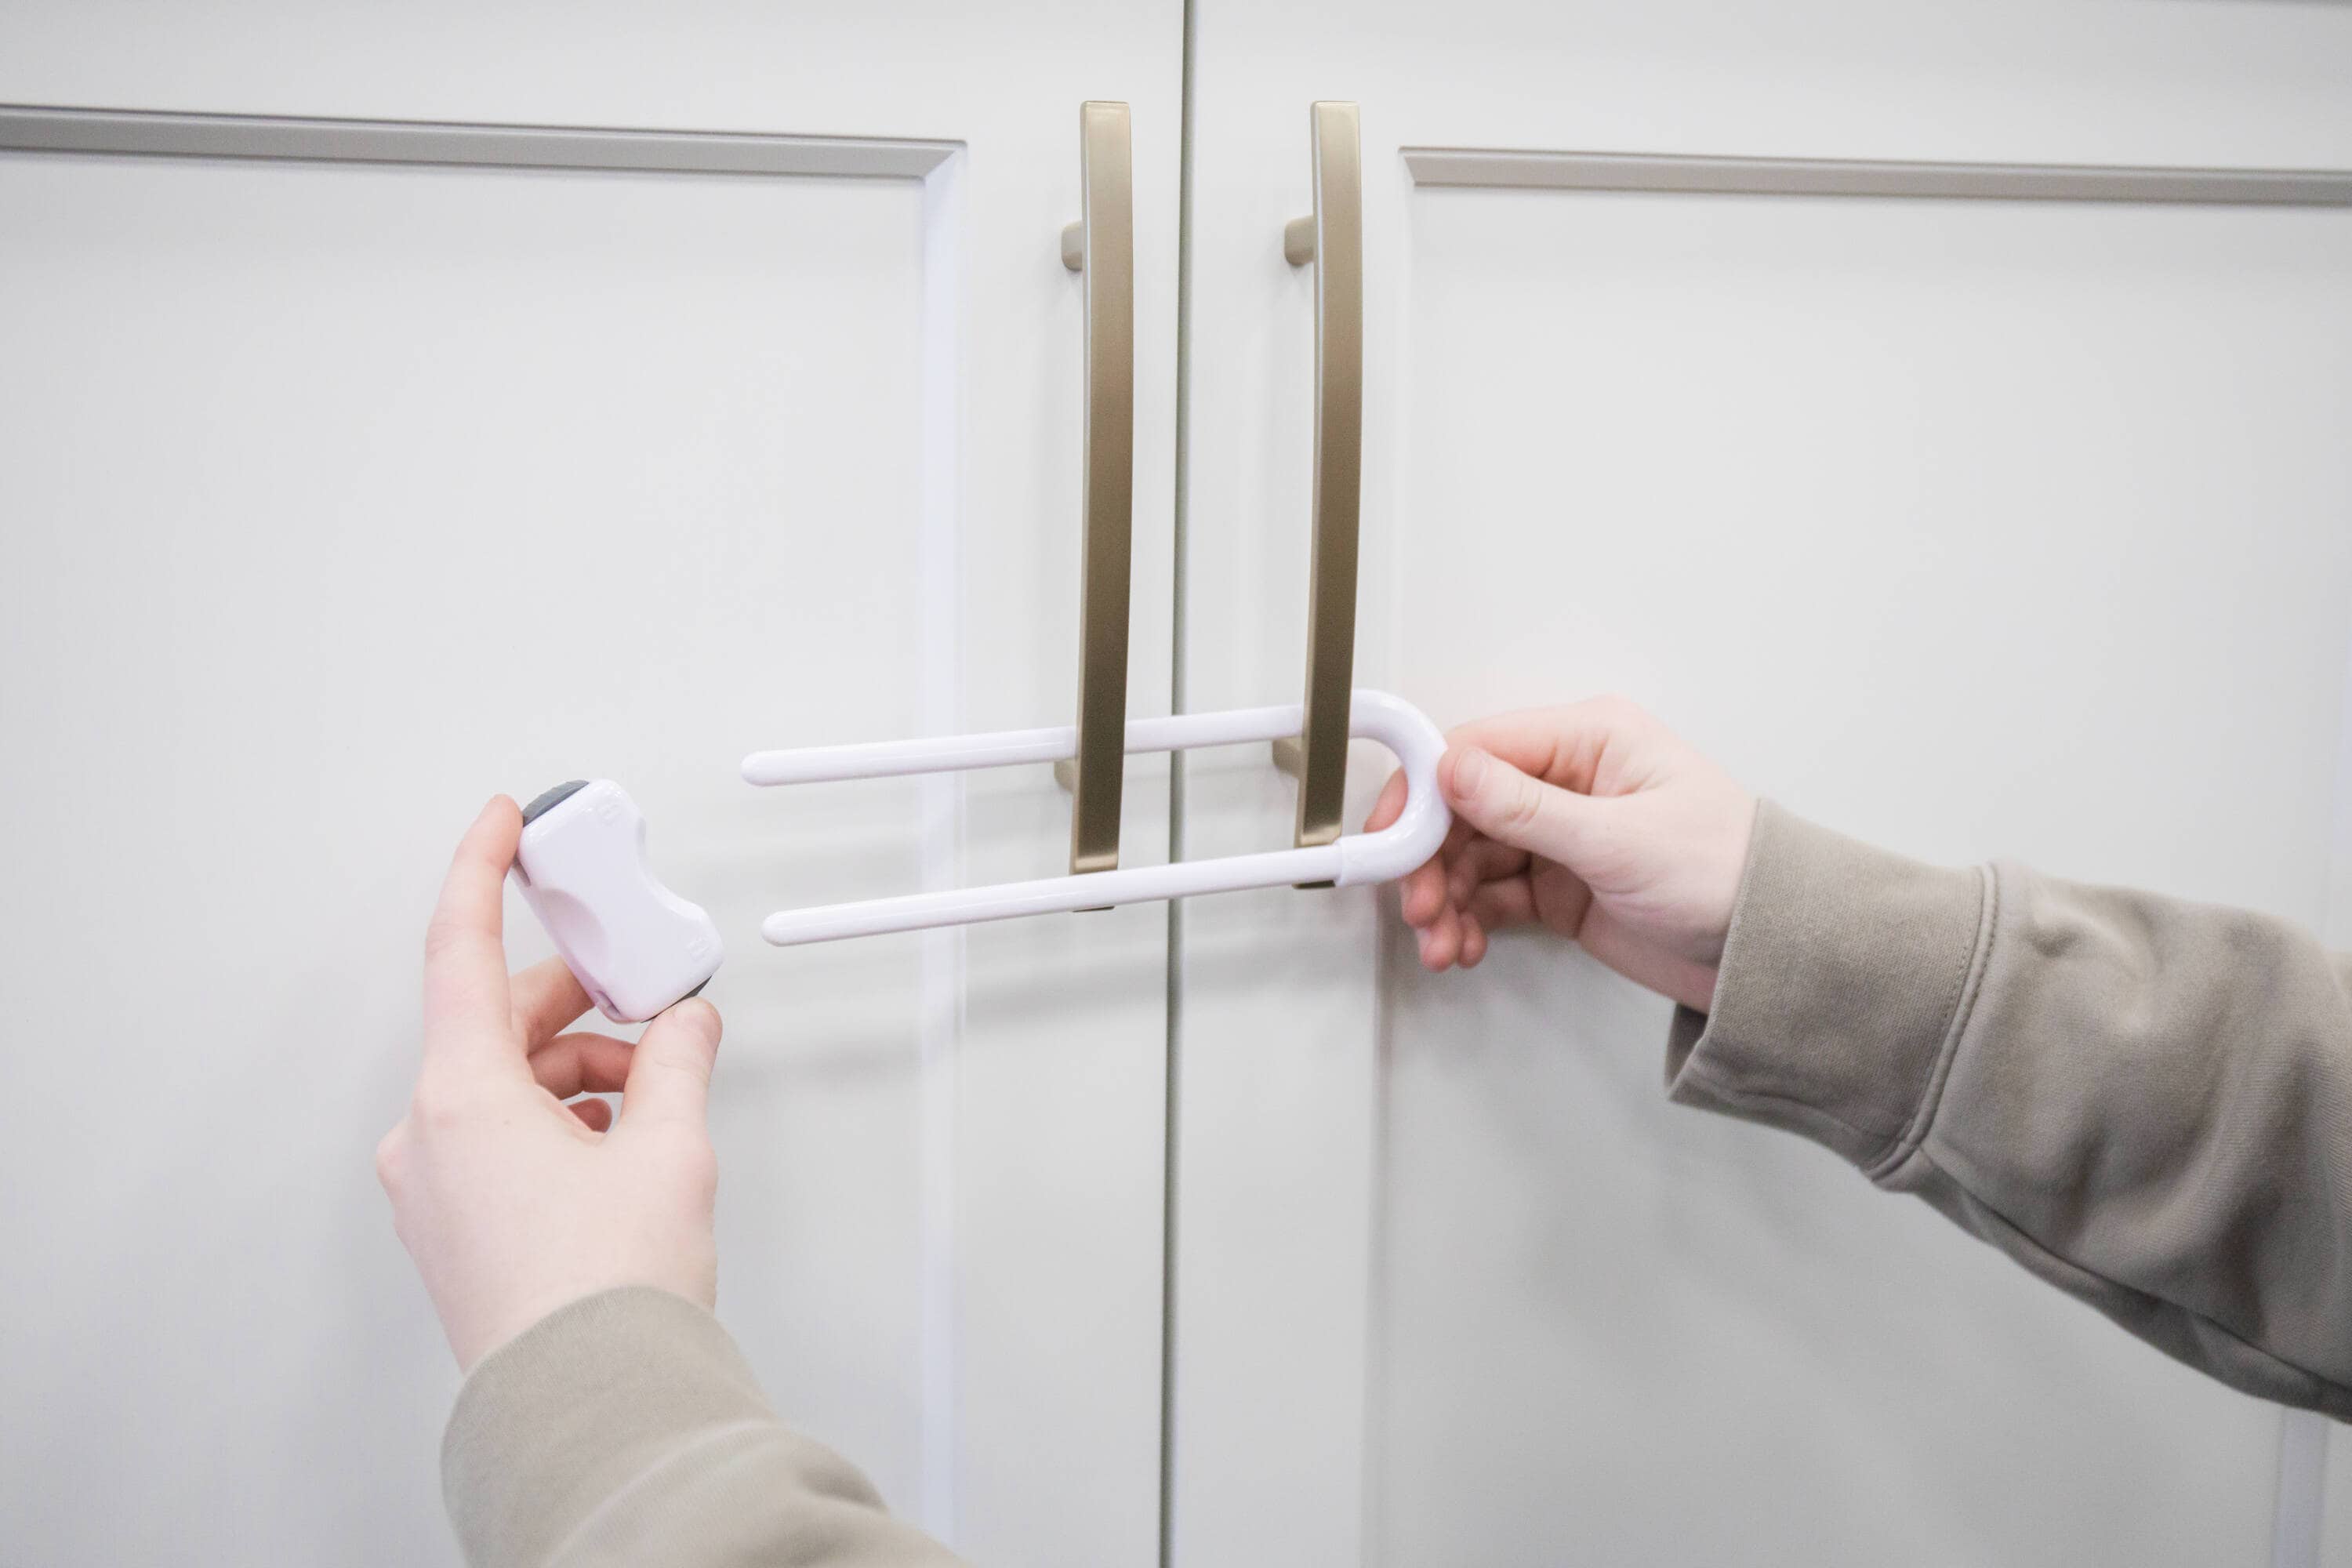 Wellco White Child Safety Locks Refrigerator Lock with Keys, for